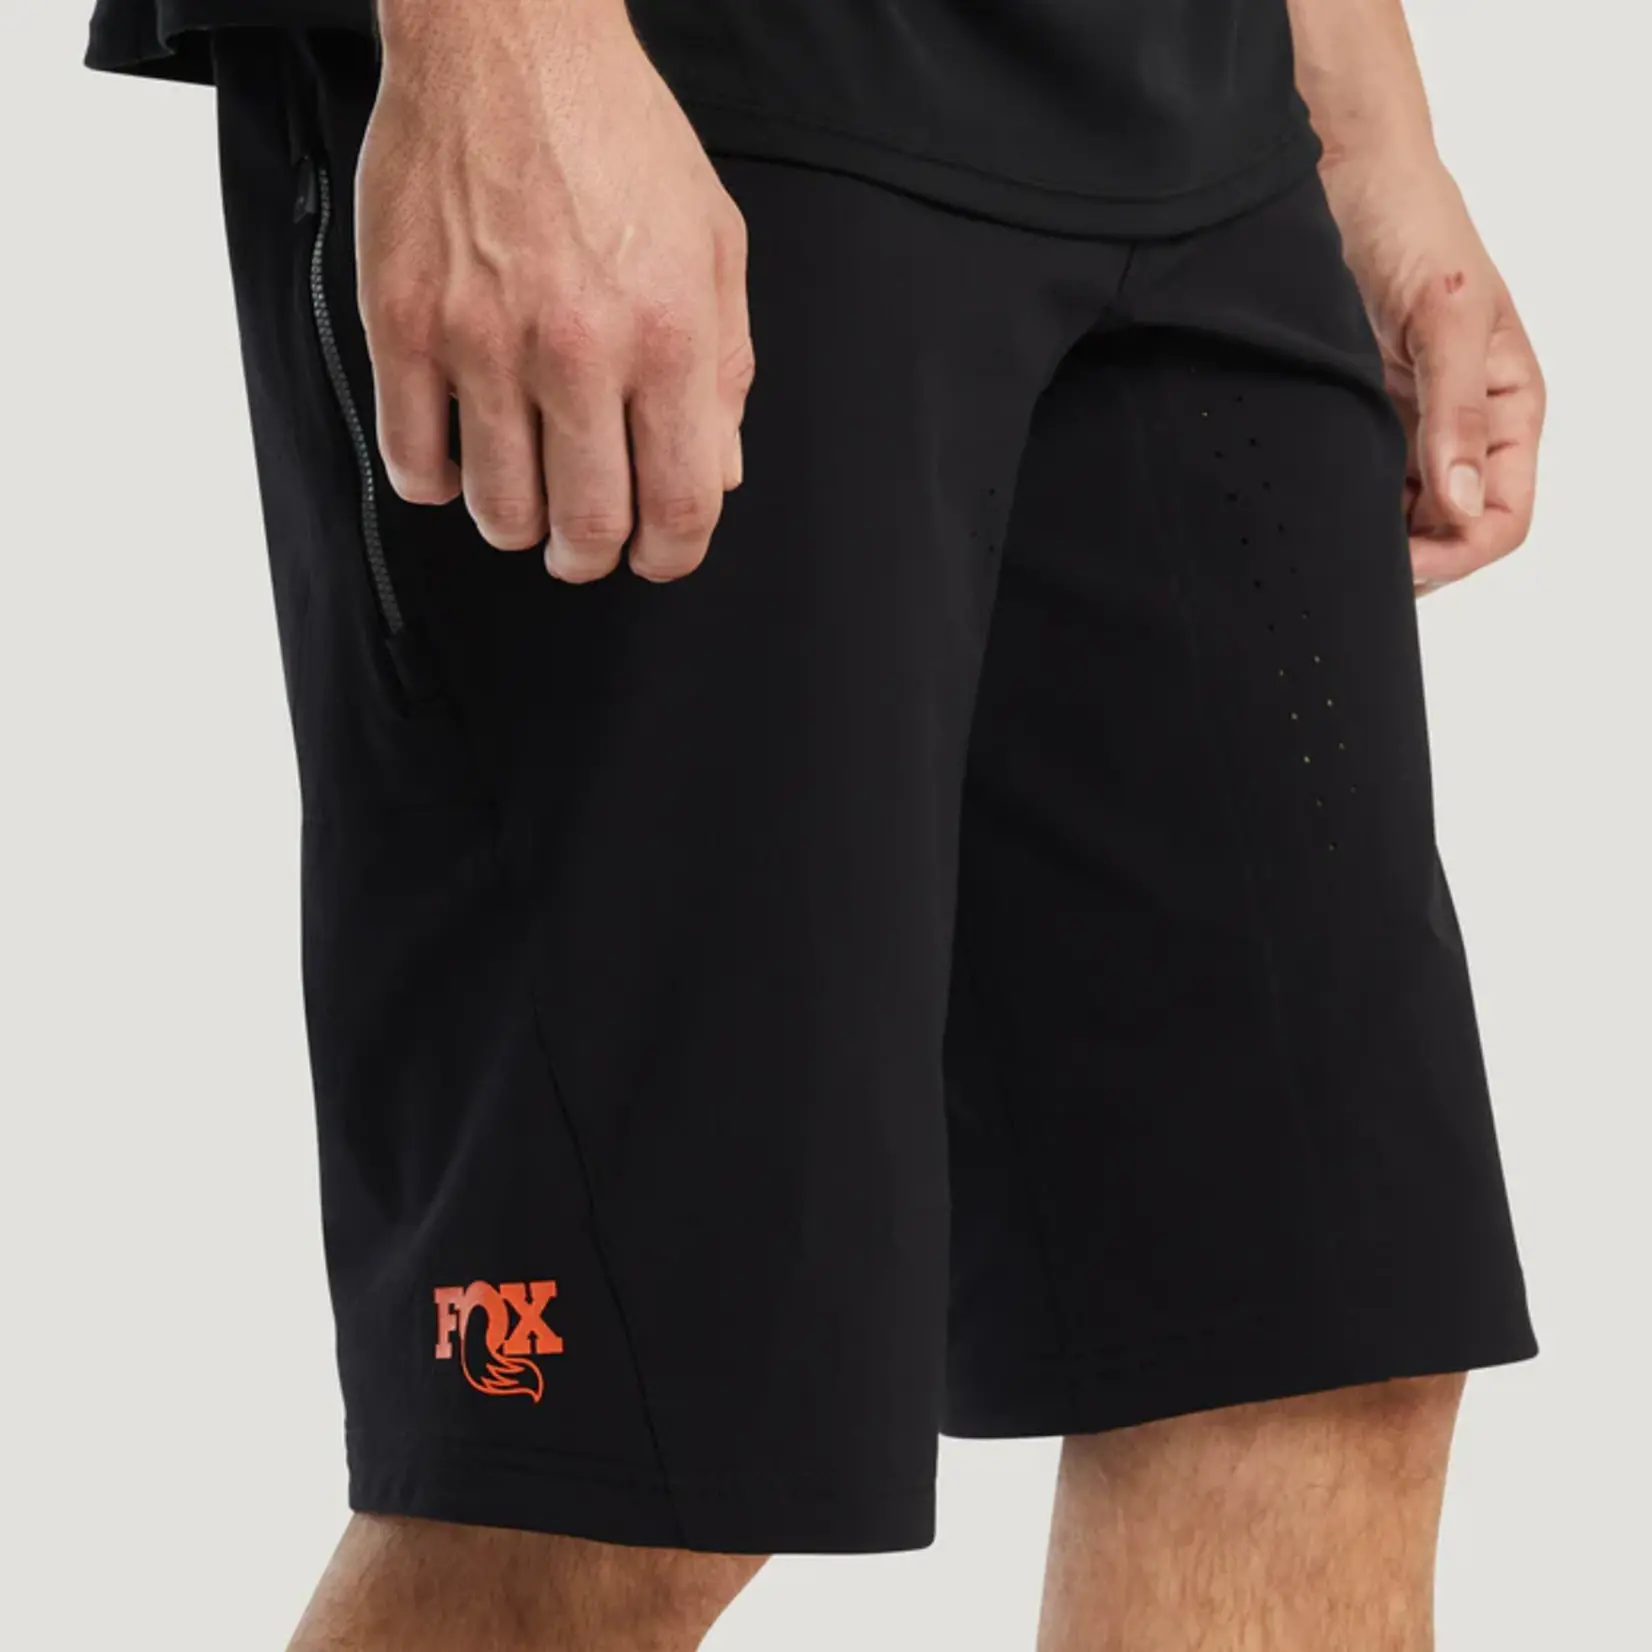 Fox Hightail shorts